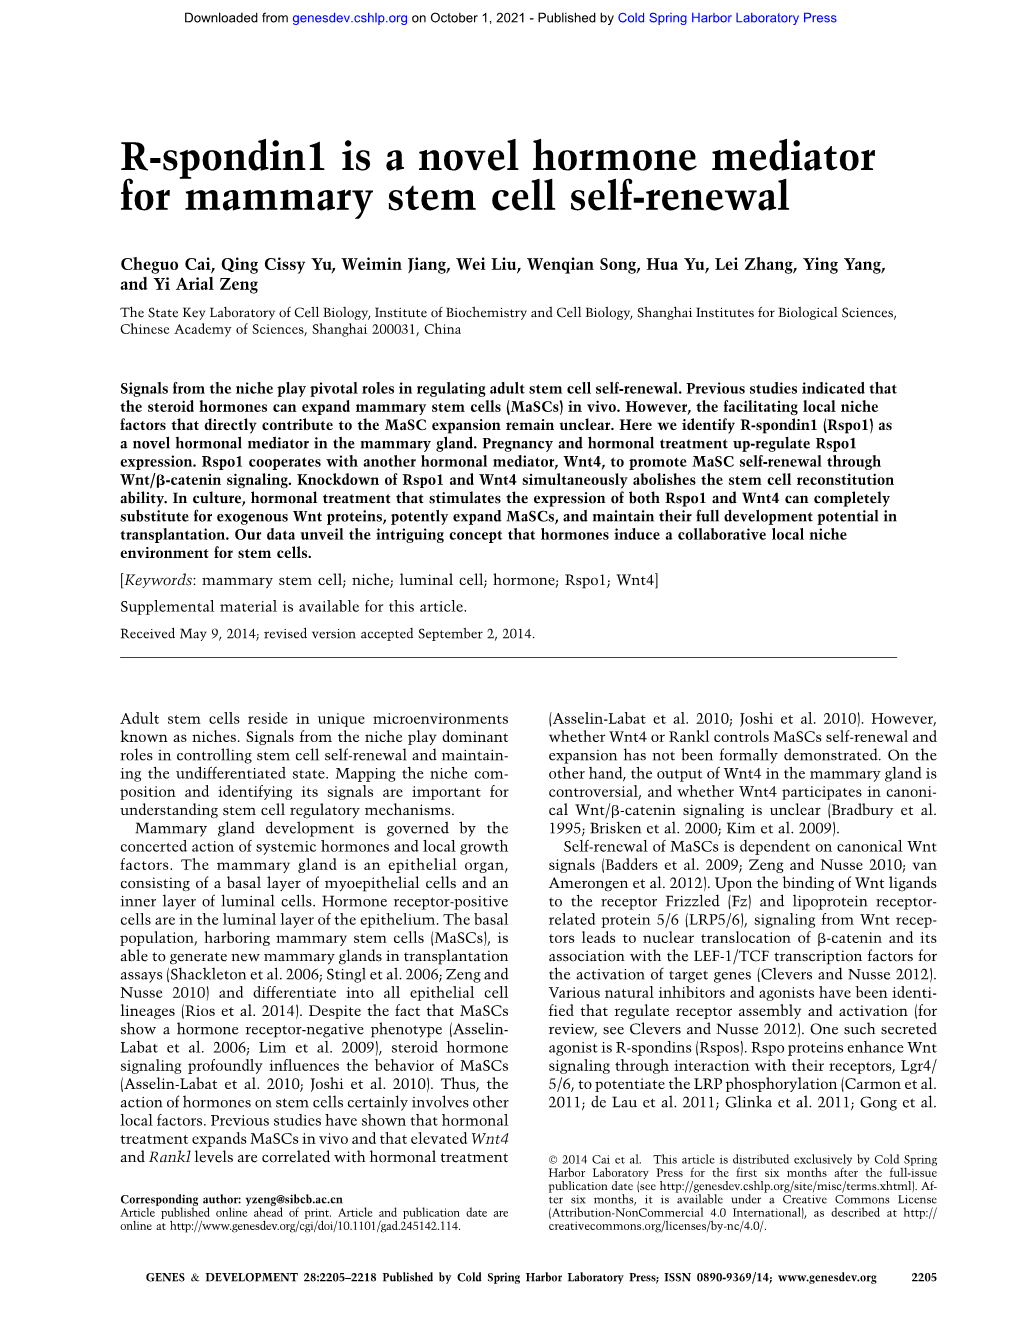 R-Spondin1 Is a Novel Hormone Mediator for Mammary Stem Cell Self-Renewal